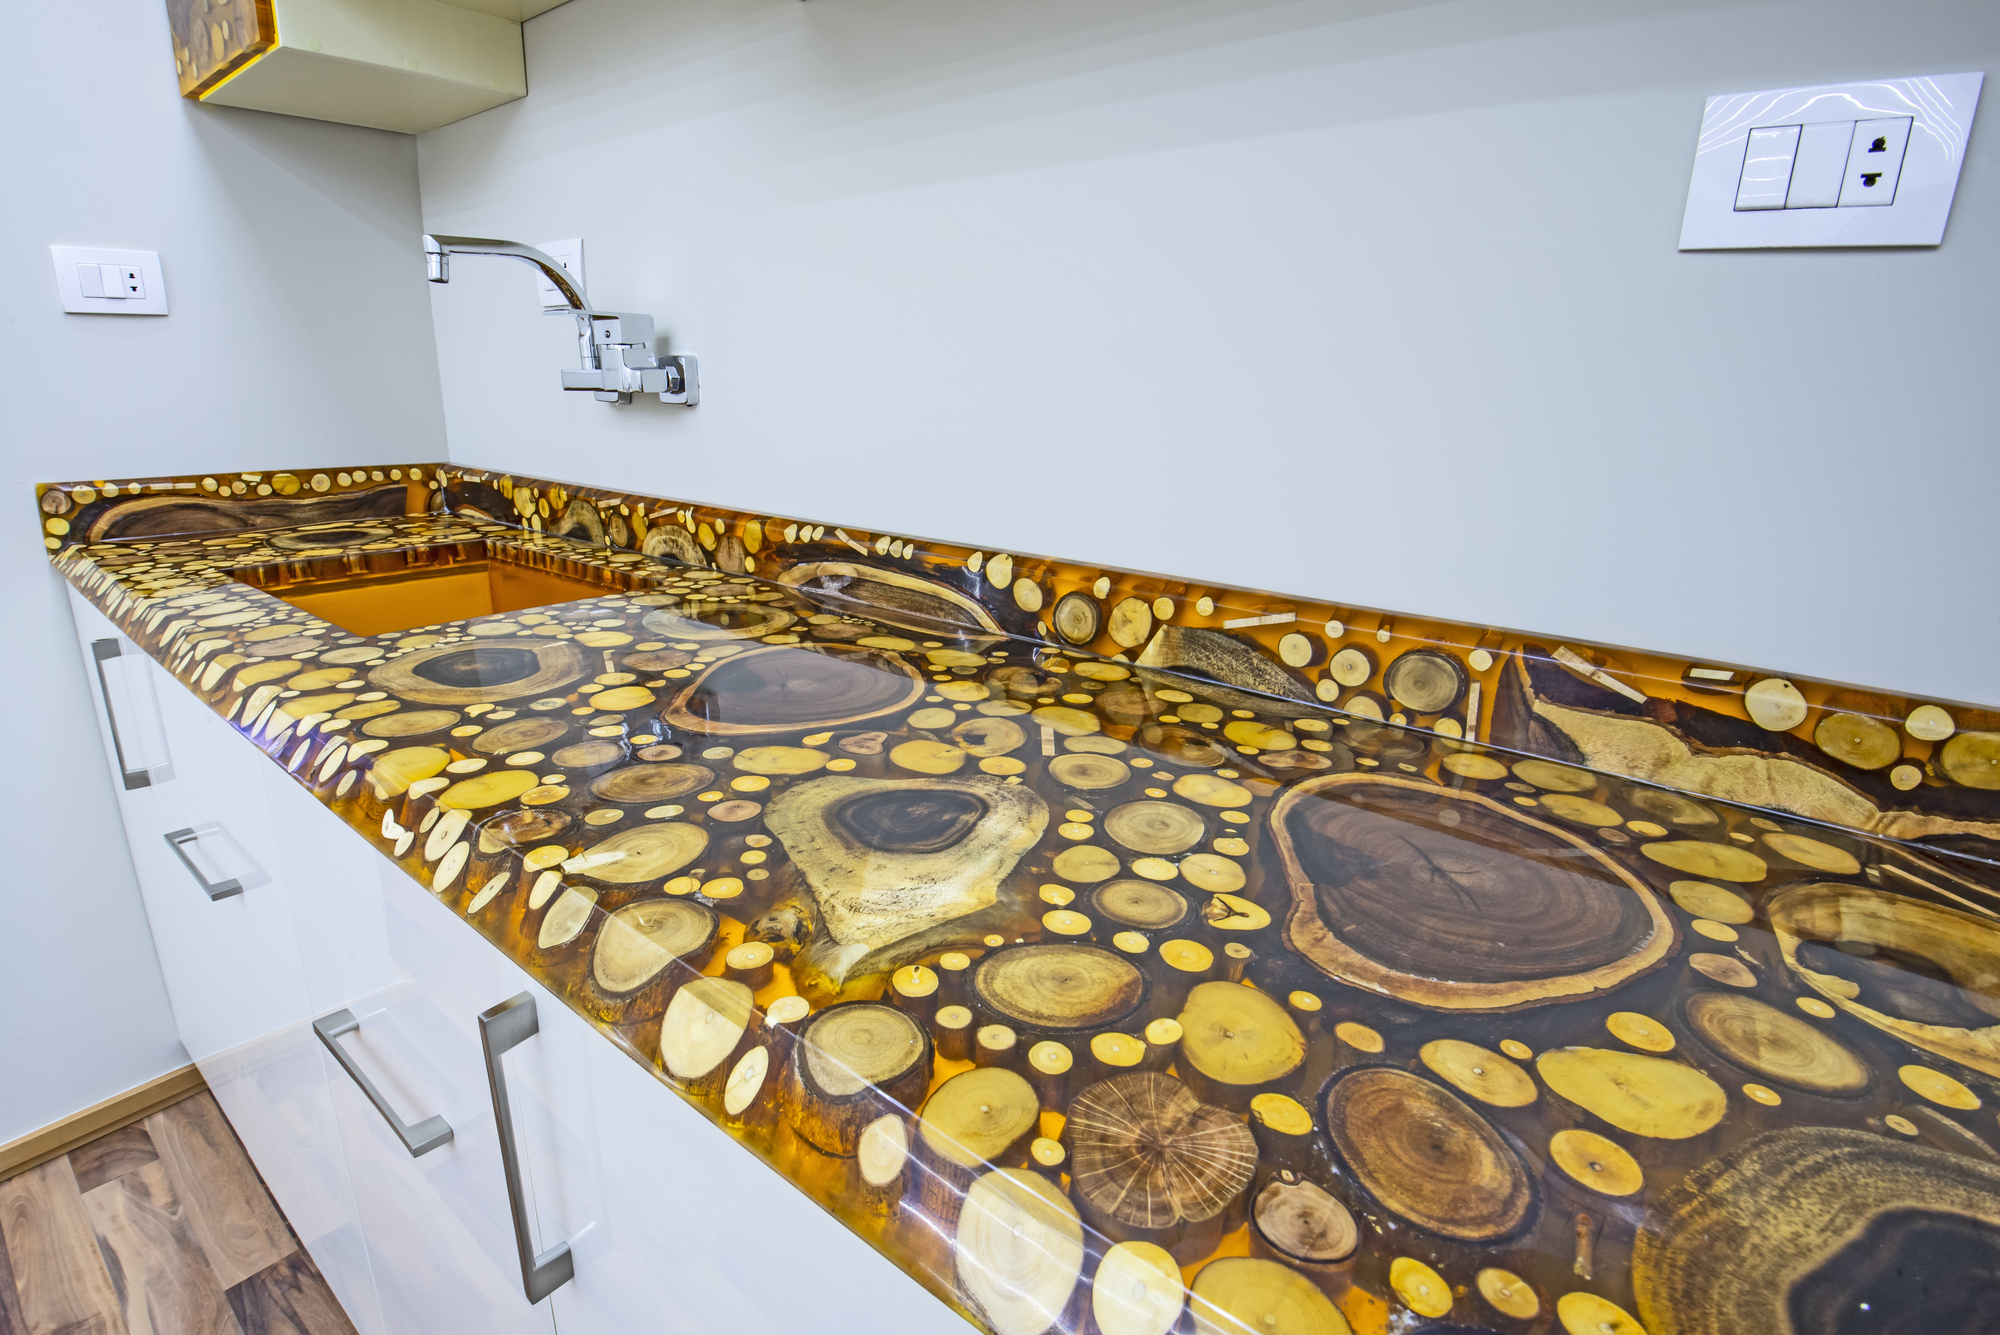 Modern kitchen epoxy resin design in a luxury apartment